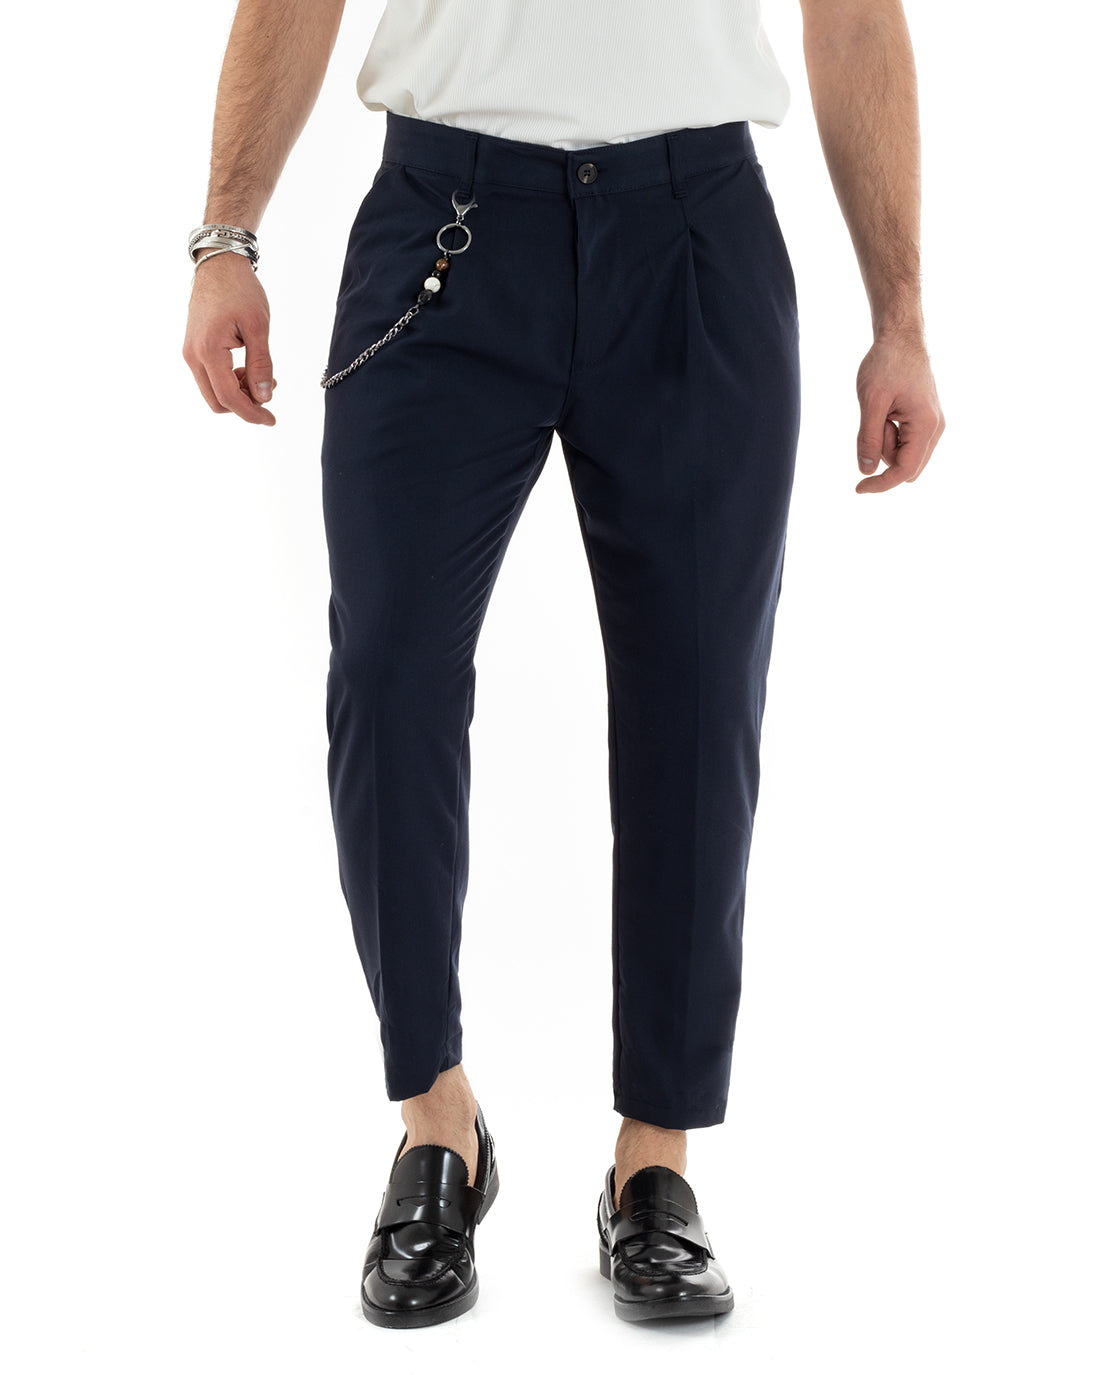 Pantaloni Uomo Tasca America Viscosa Blu Capri Casual Classico Pinces GIOSAL-P5947A